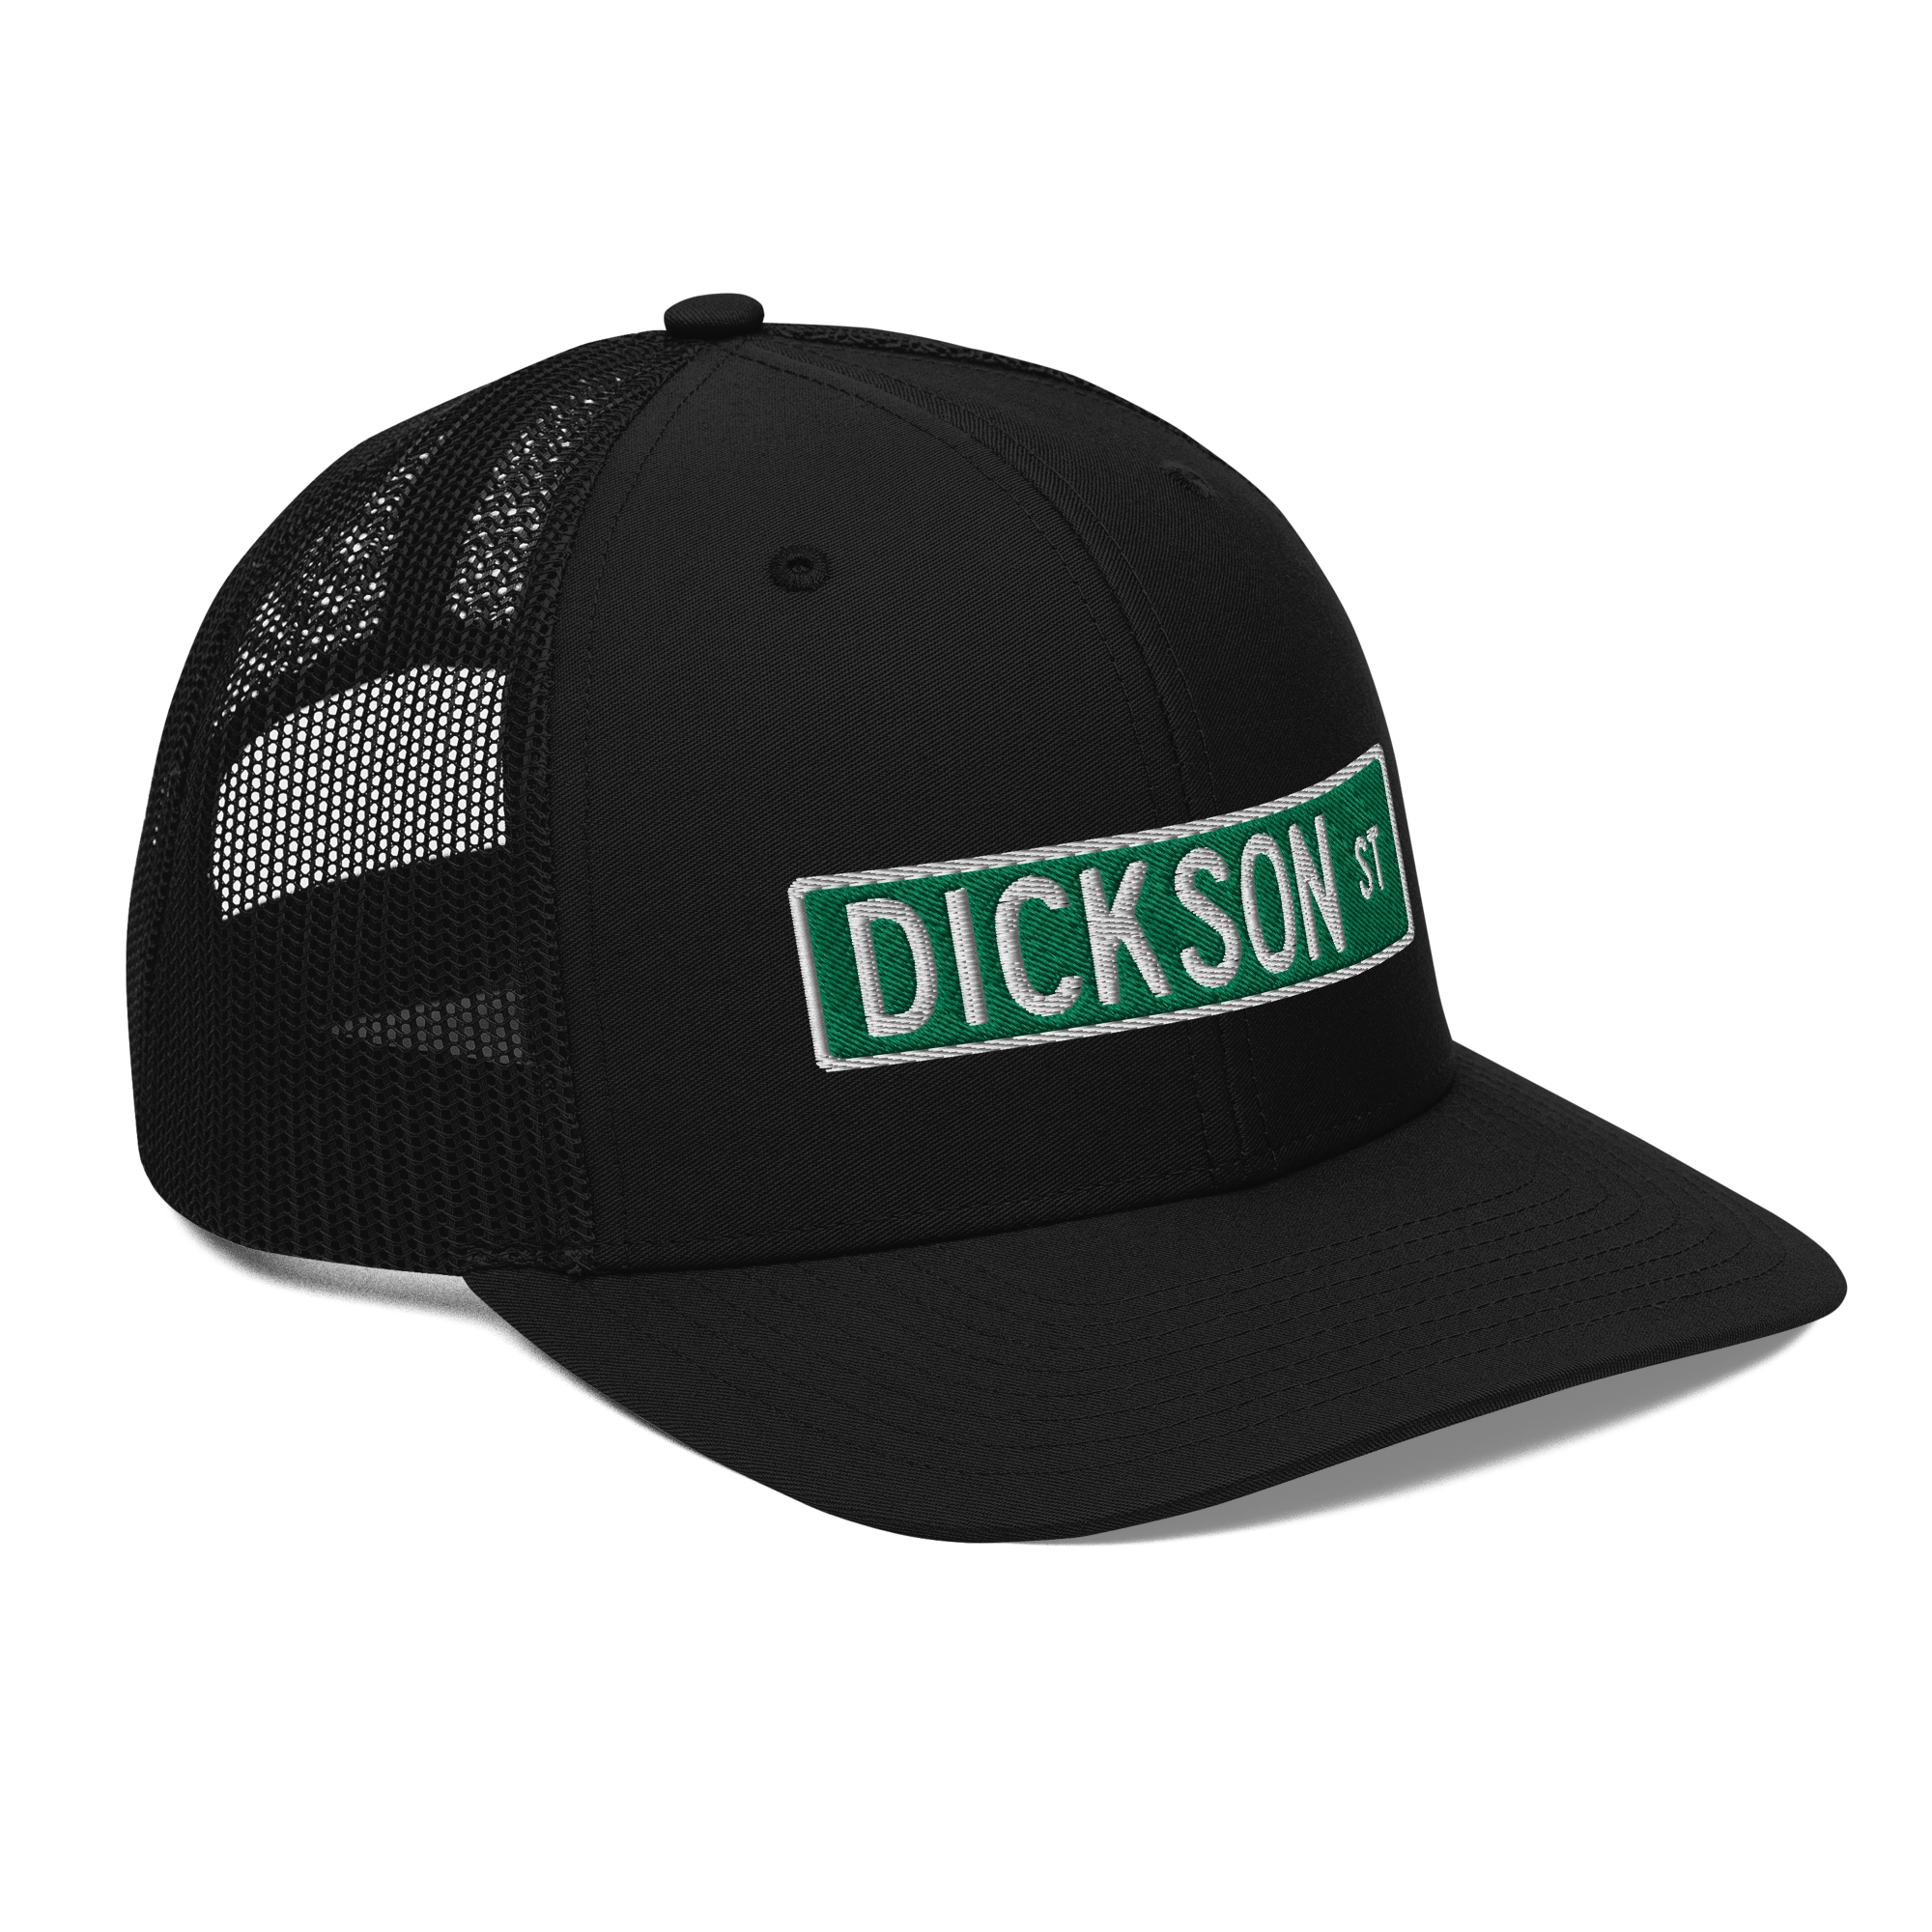 Dickson Street Sign Trucker Hat